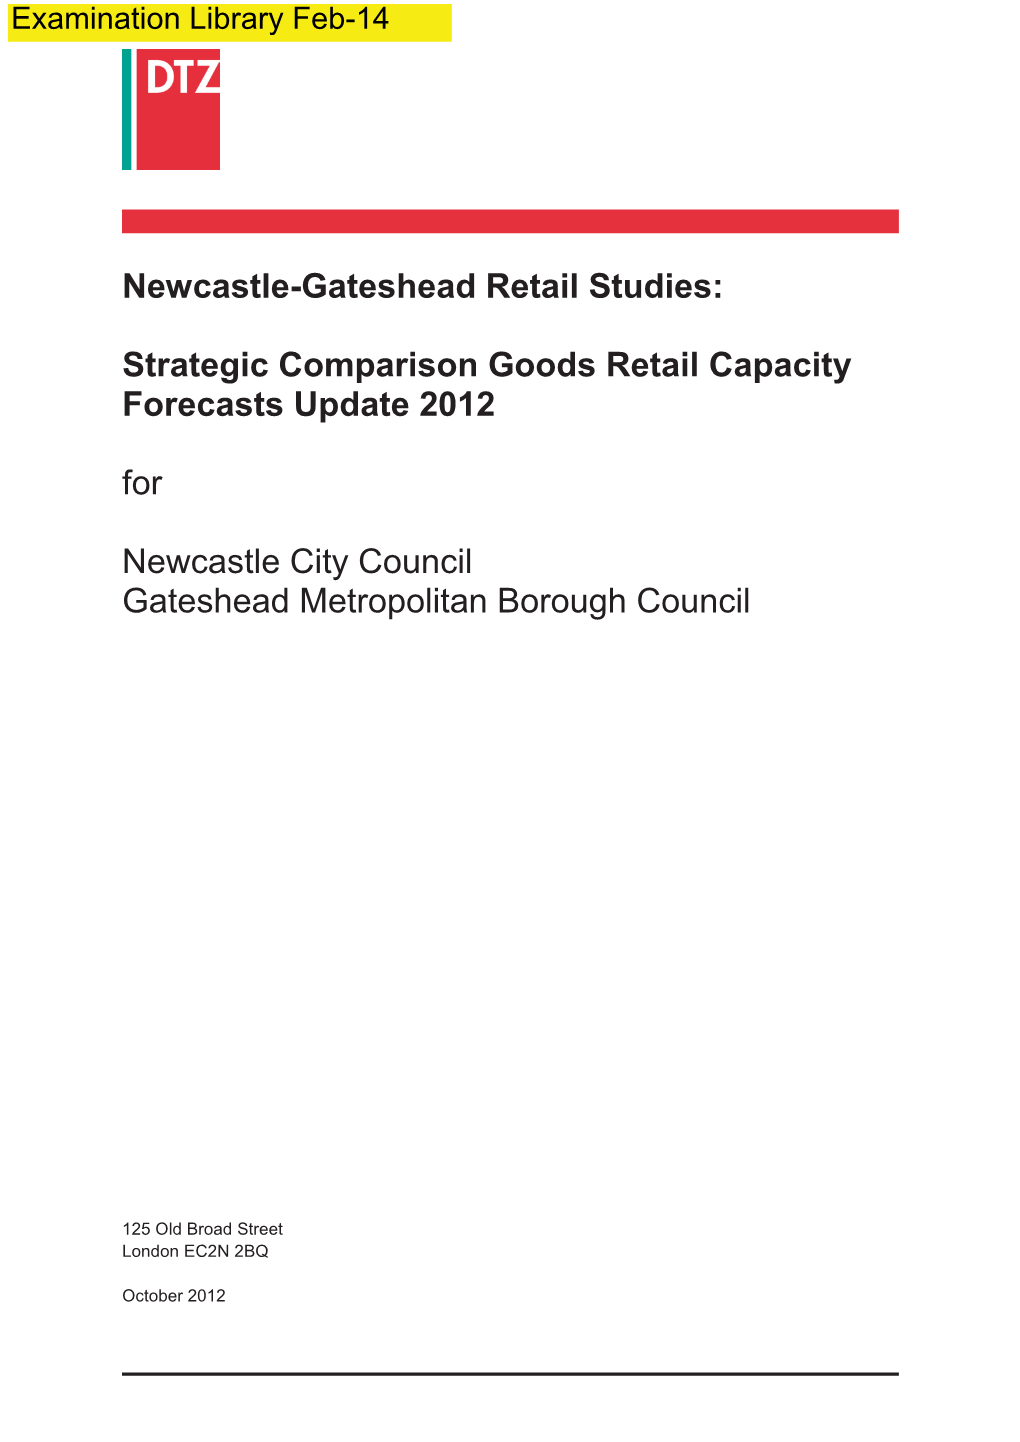 Newcastle-Gateshead Retail Studies: Strategic Comparison Goods Retail Capacity Forecasts Update 2012 for Newcastle City Council